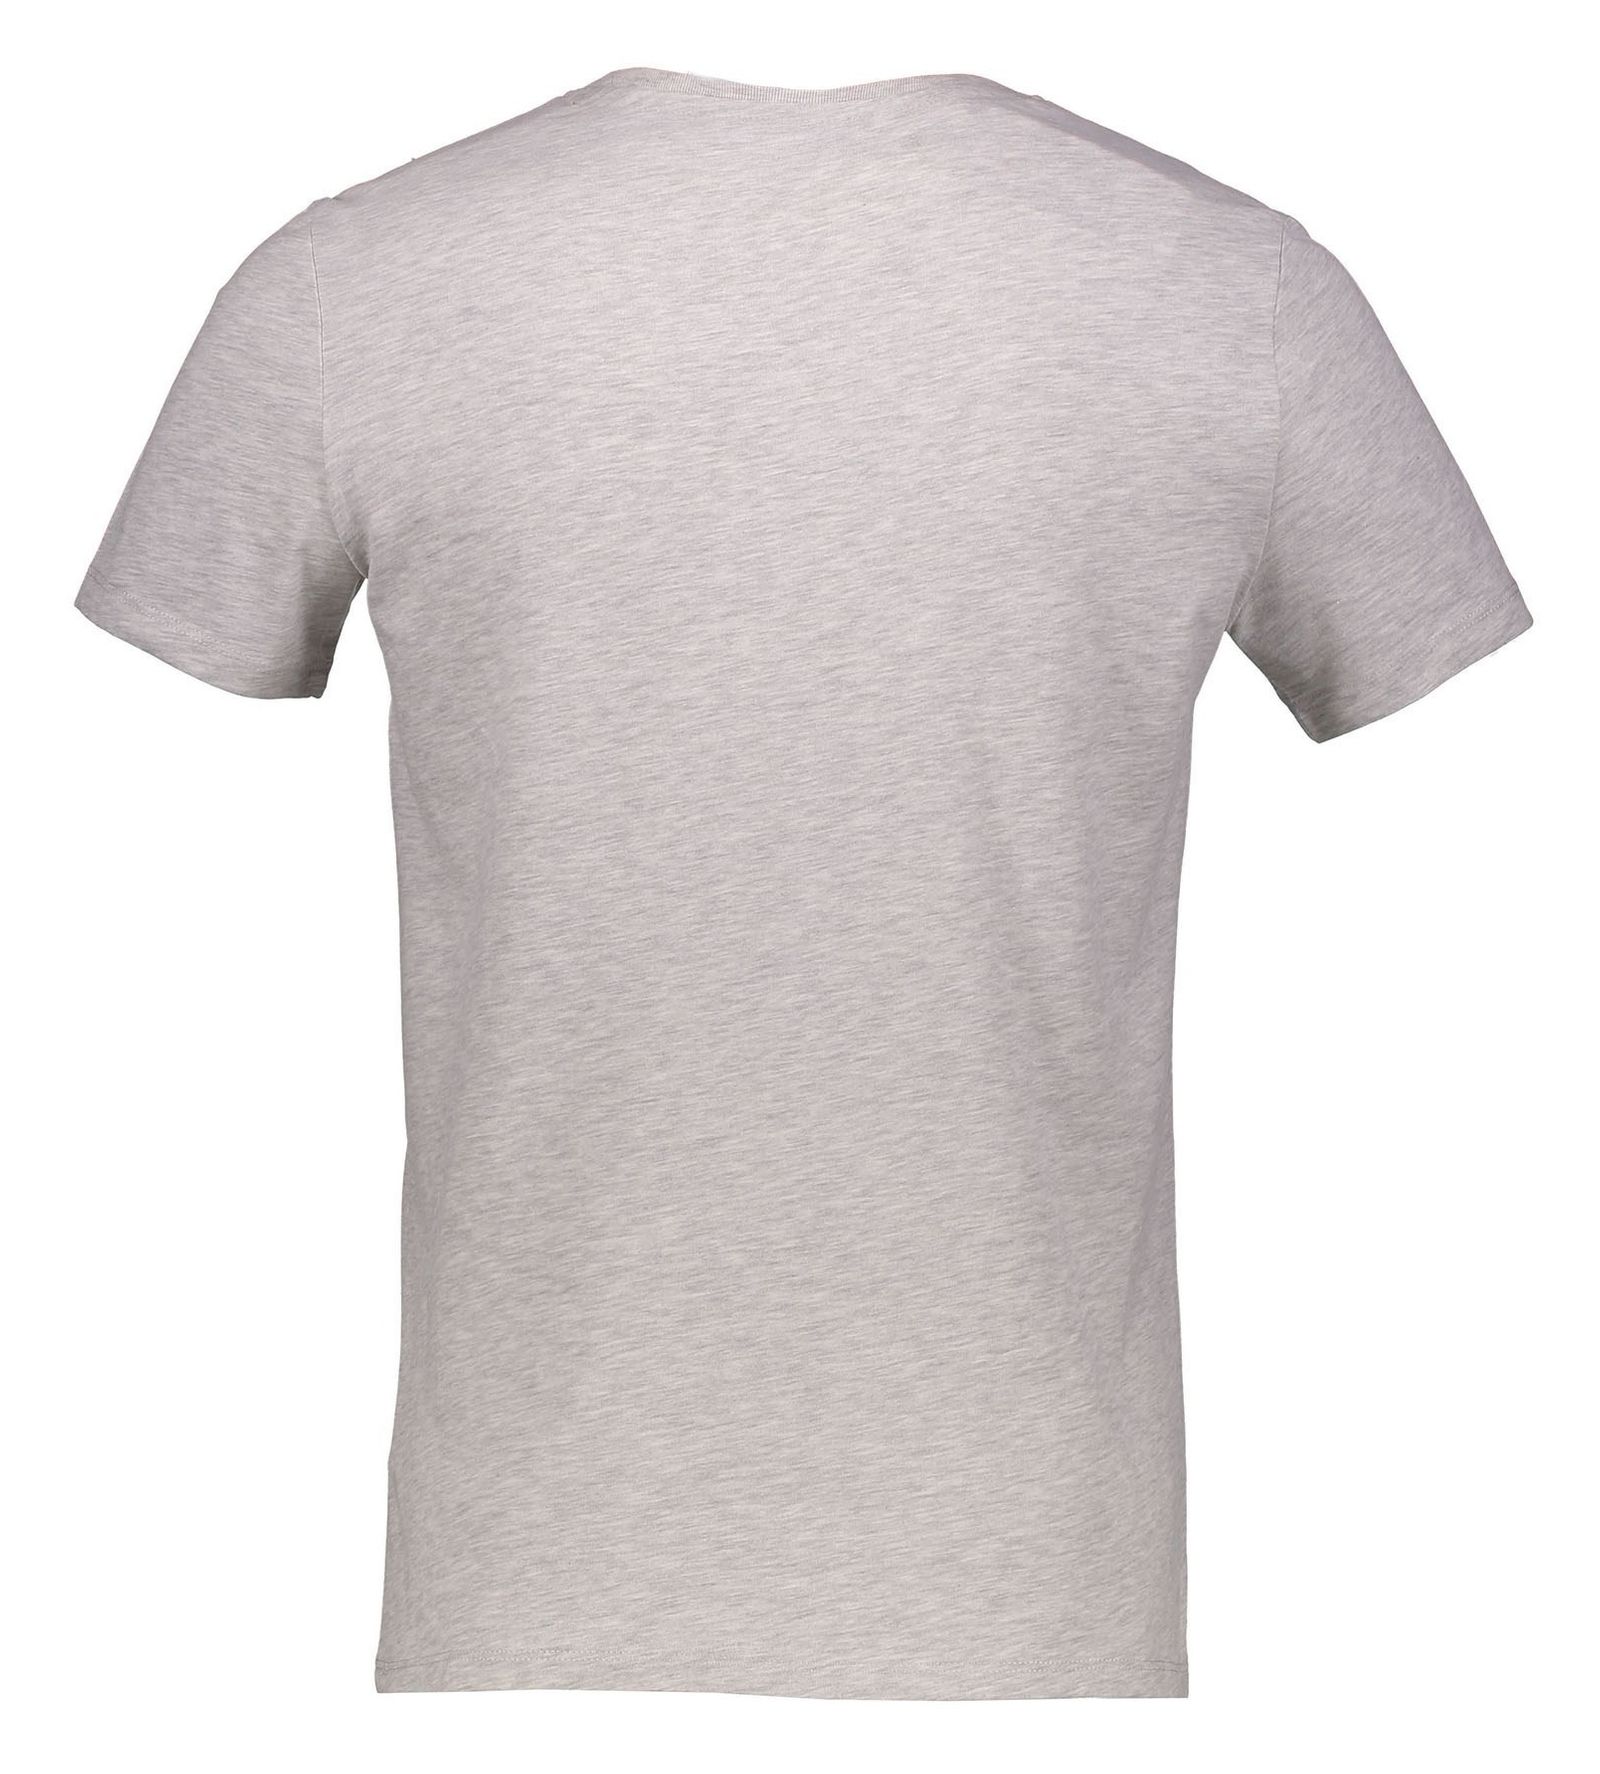 تی شرت نخی یقه گرد مردانه - دفکتو - طوسي روشن - 5